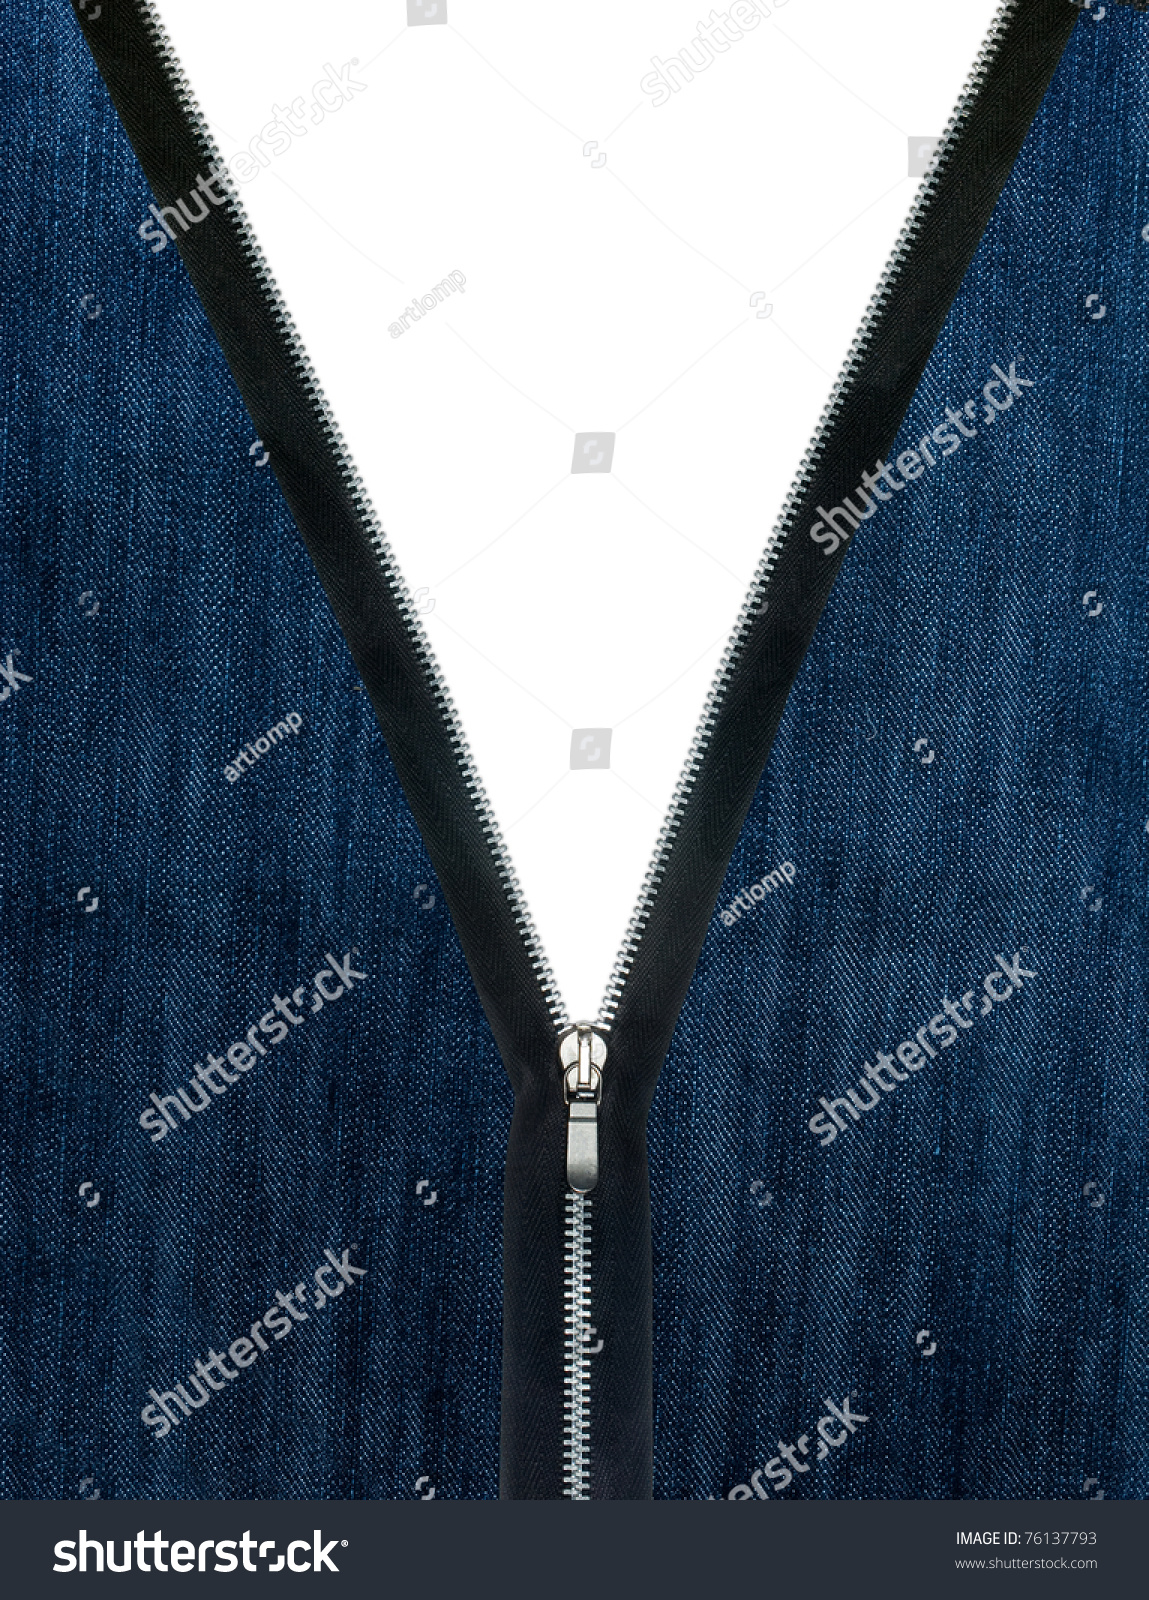 Zipper Unzip Jeans Cloth Stock Photo 76137793 : Shutterstock